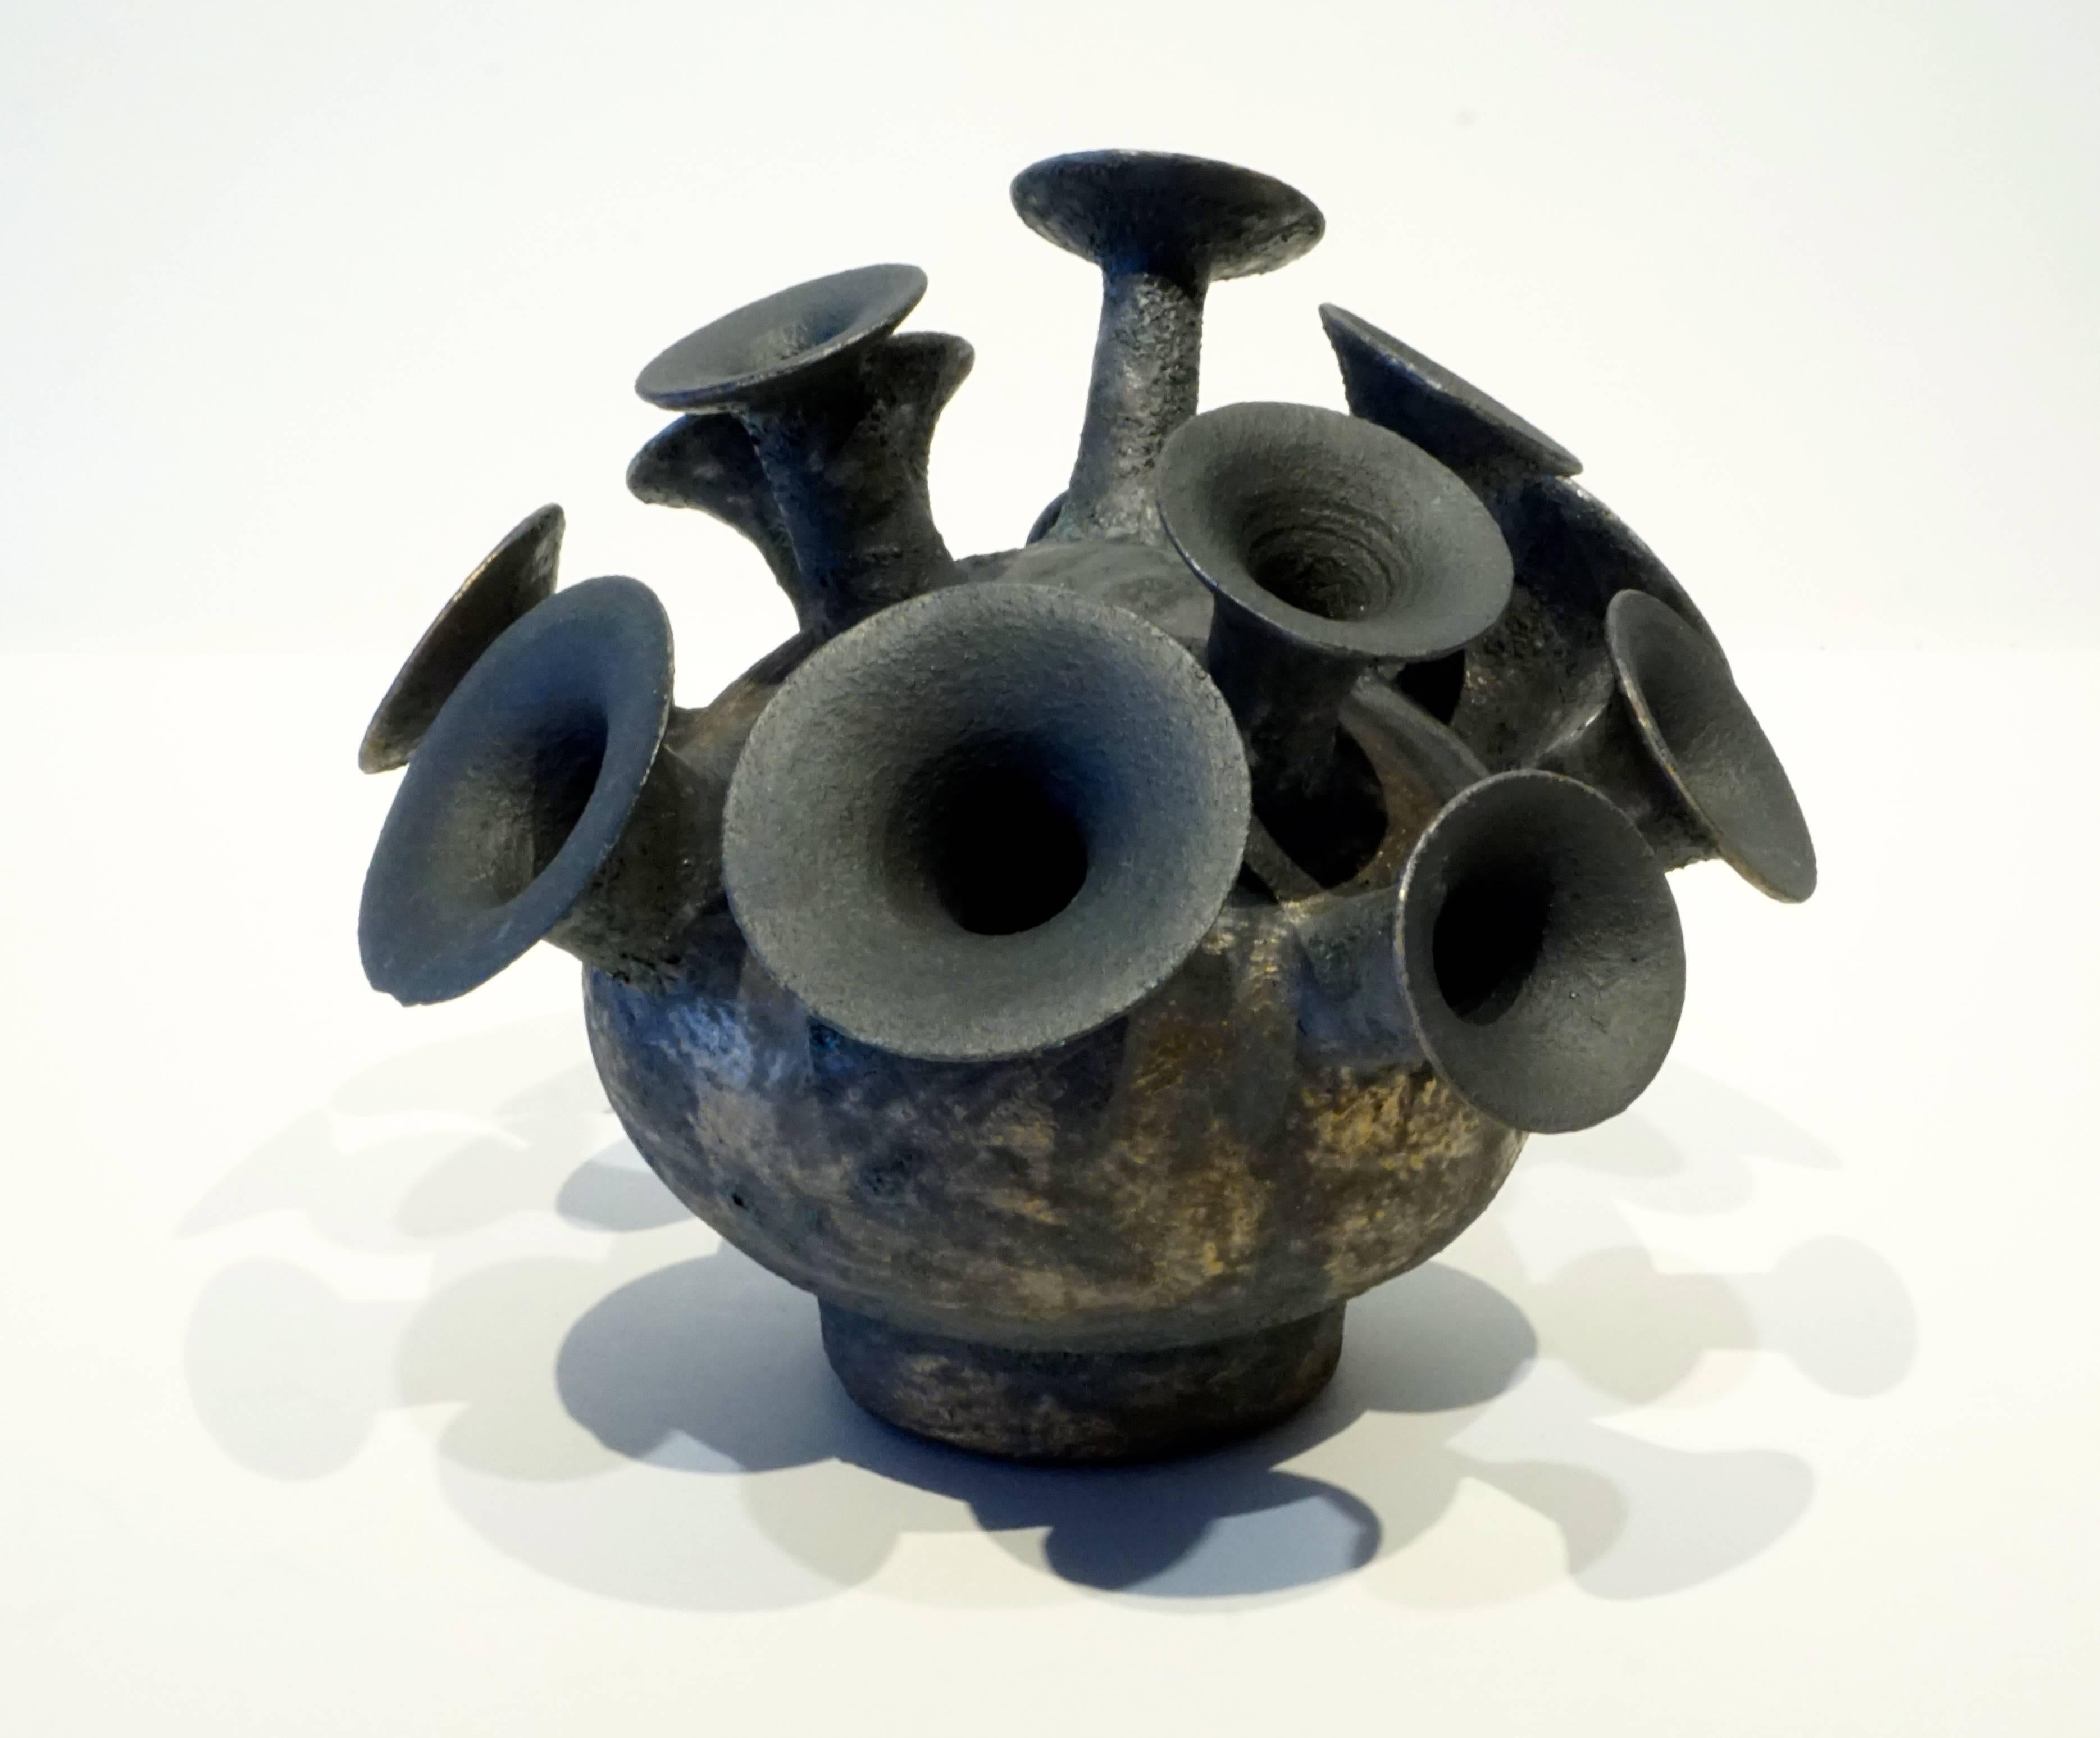 Contemporary Multi Spout Ceramic Vessel Sculpture by Studio Potter Jeremy Gercke, 2016